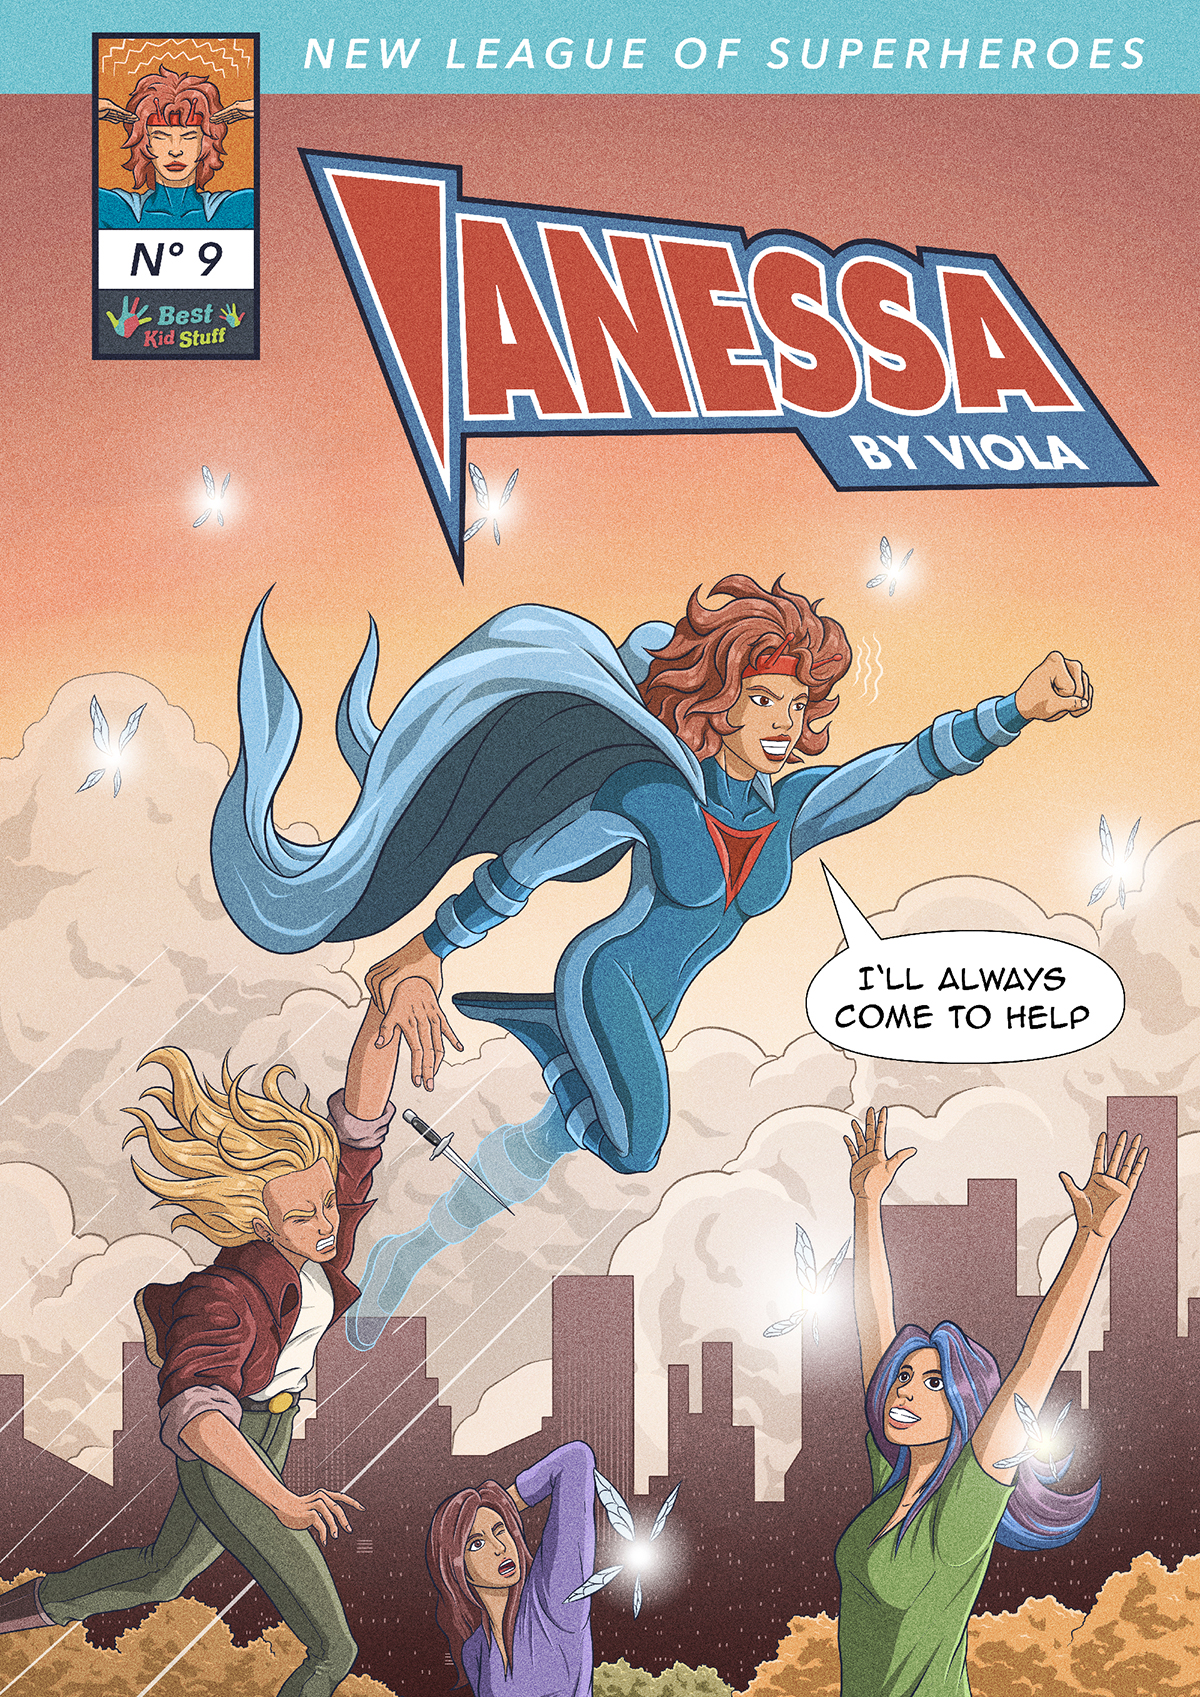 09 New League of Superheroes Vanessa